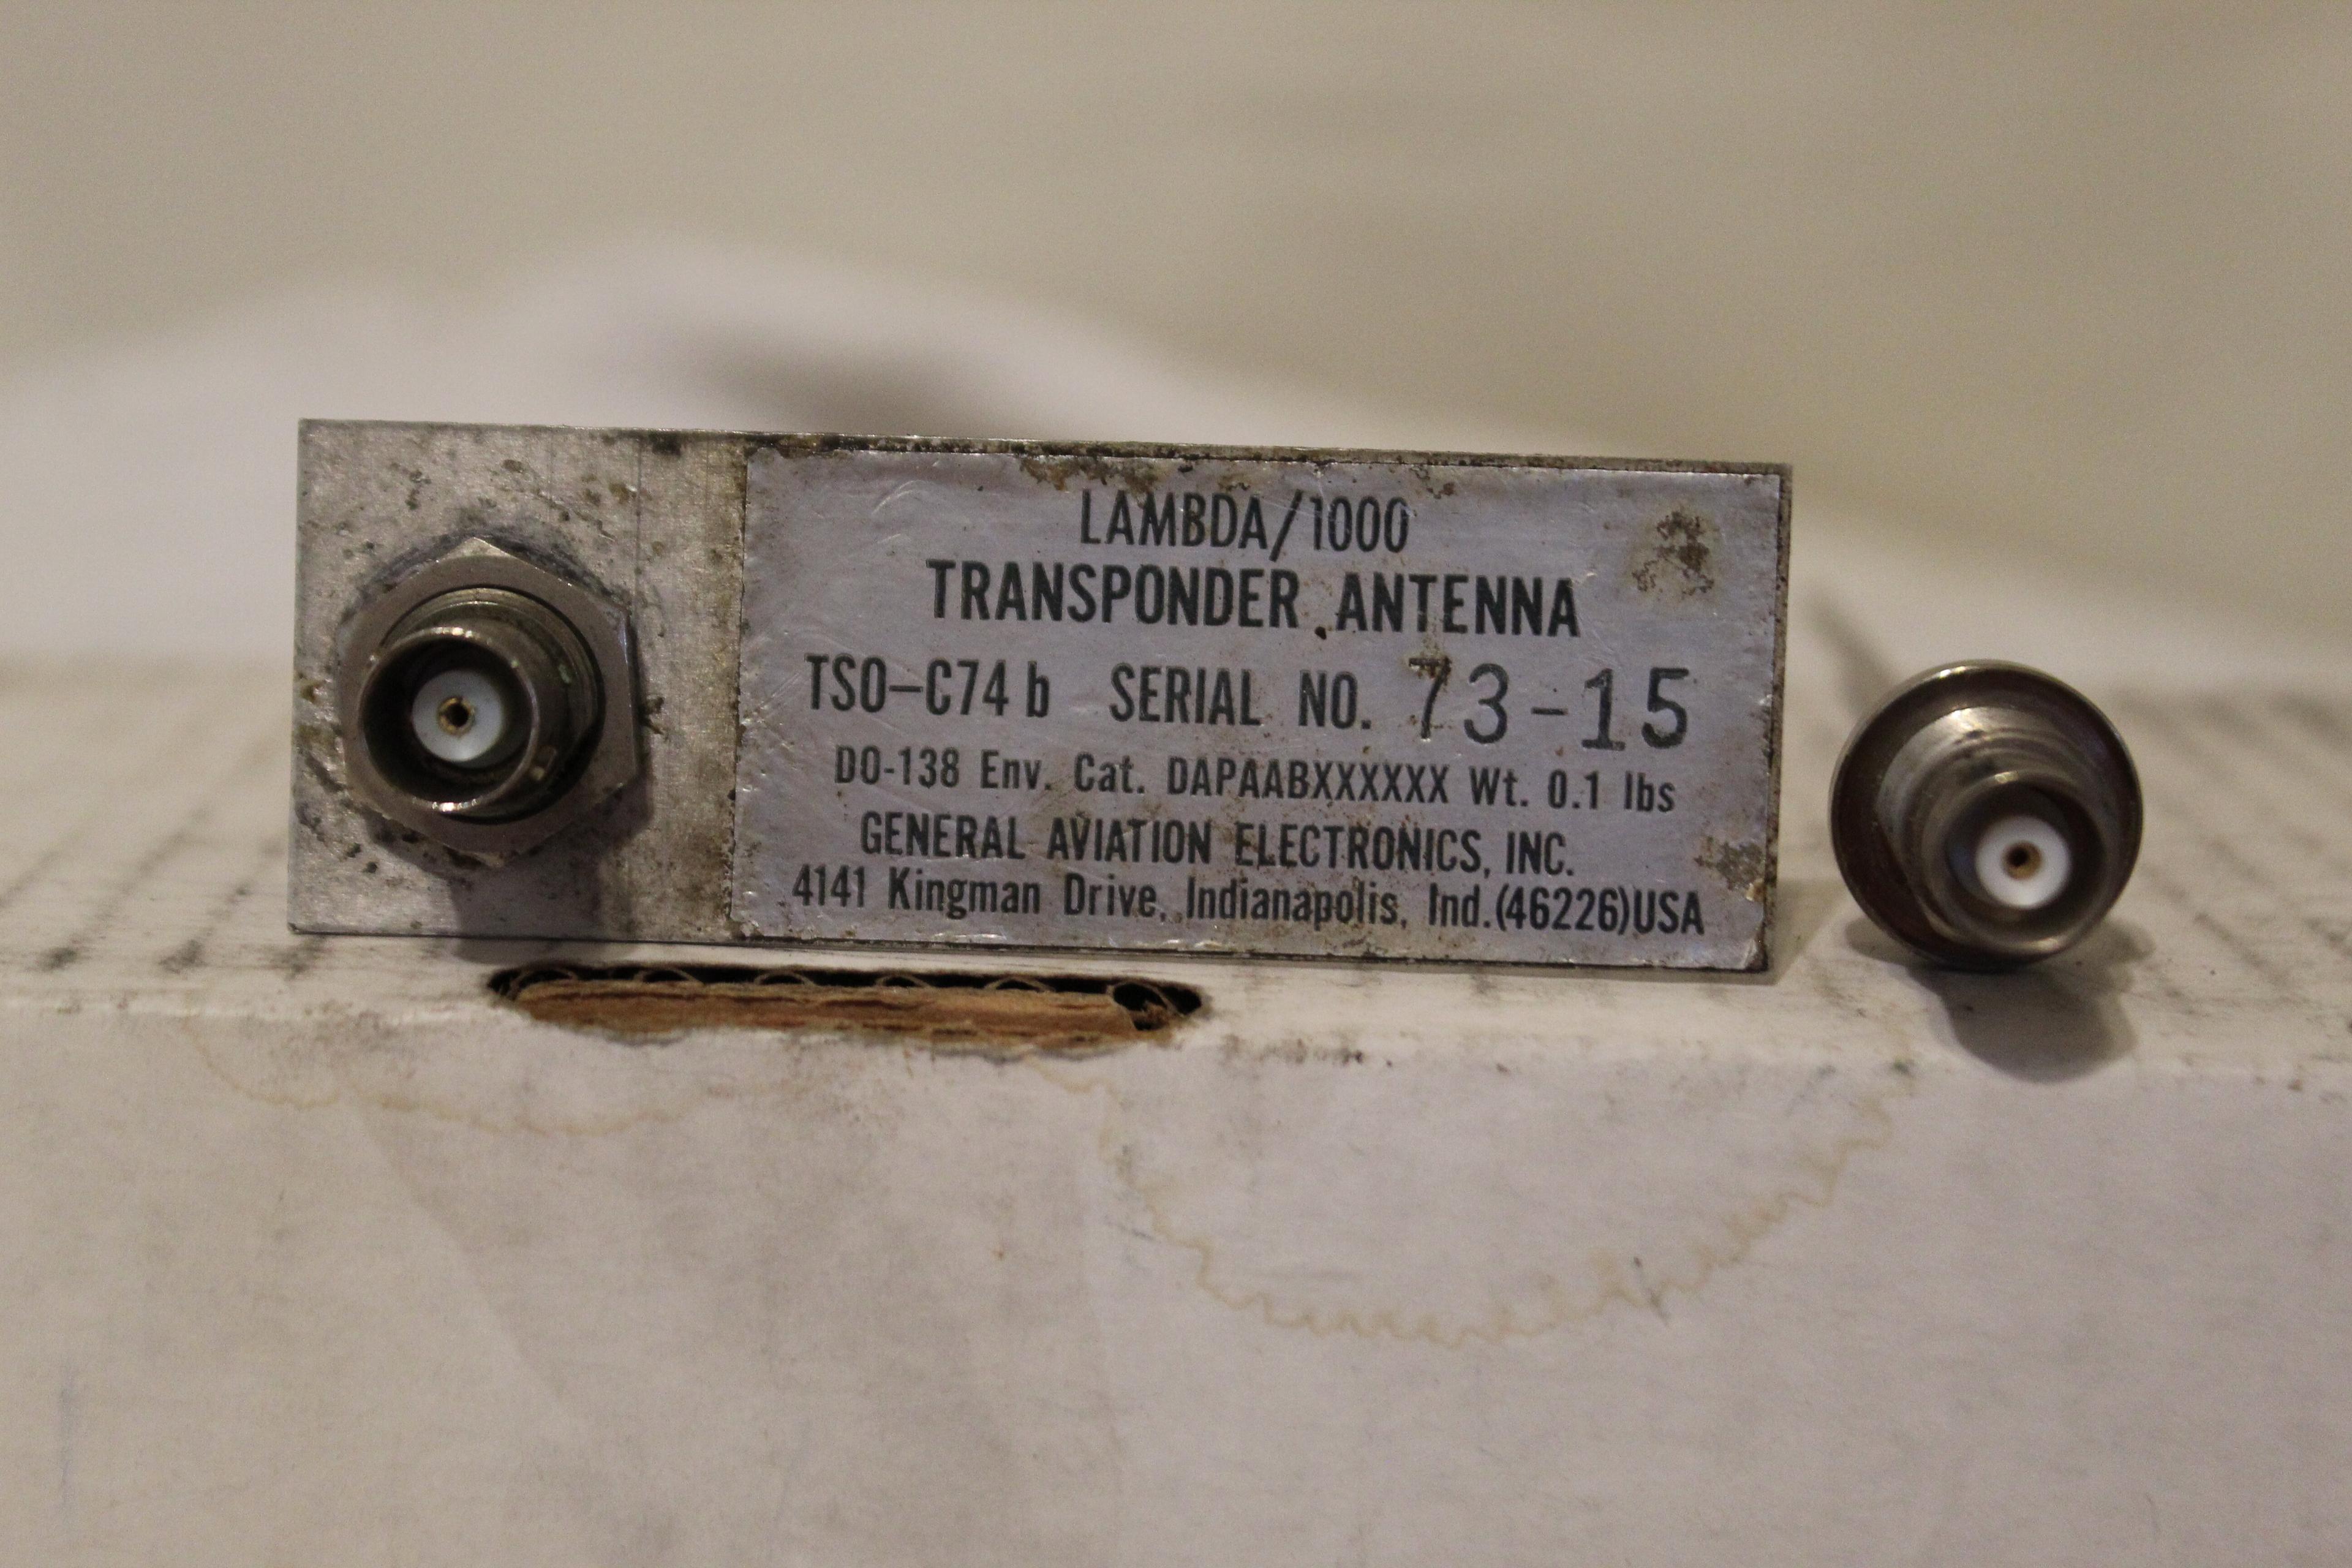 General Aviation Lambda/1000 Transponder Antenna Tso-c74 B